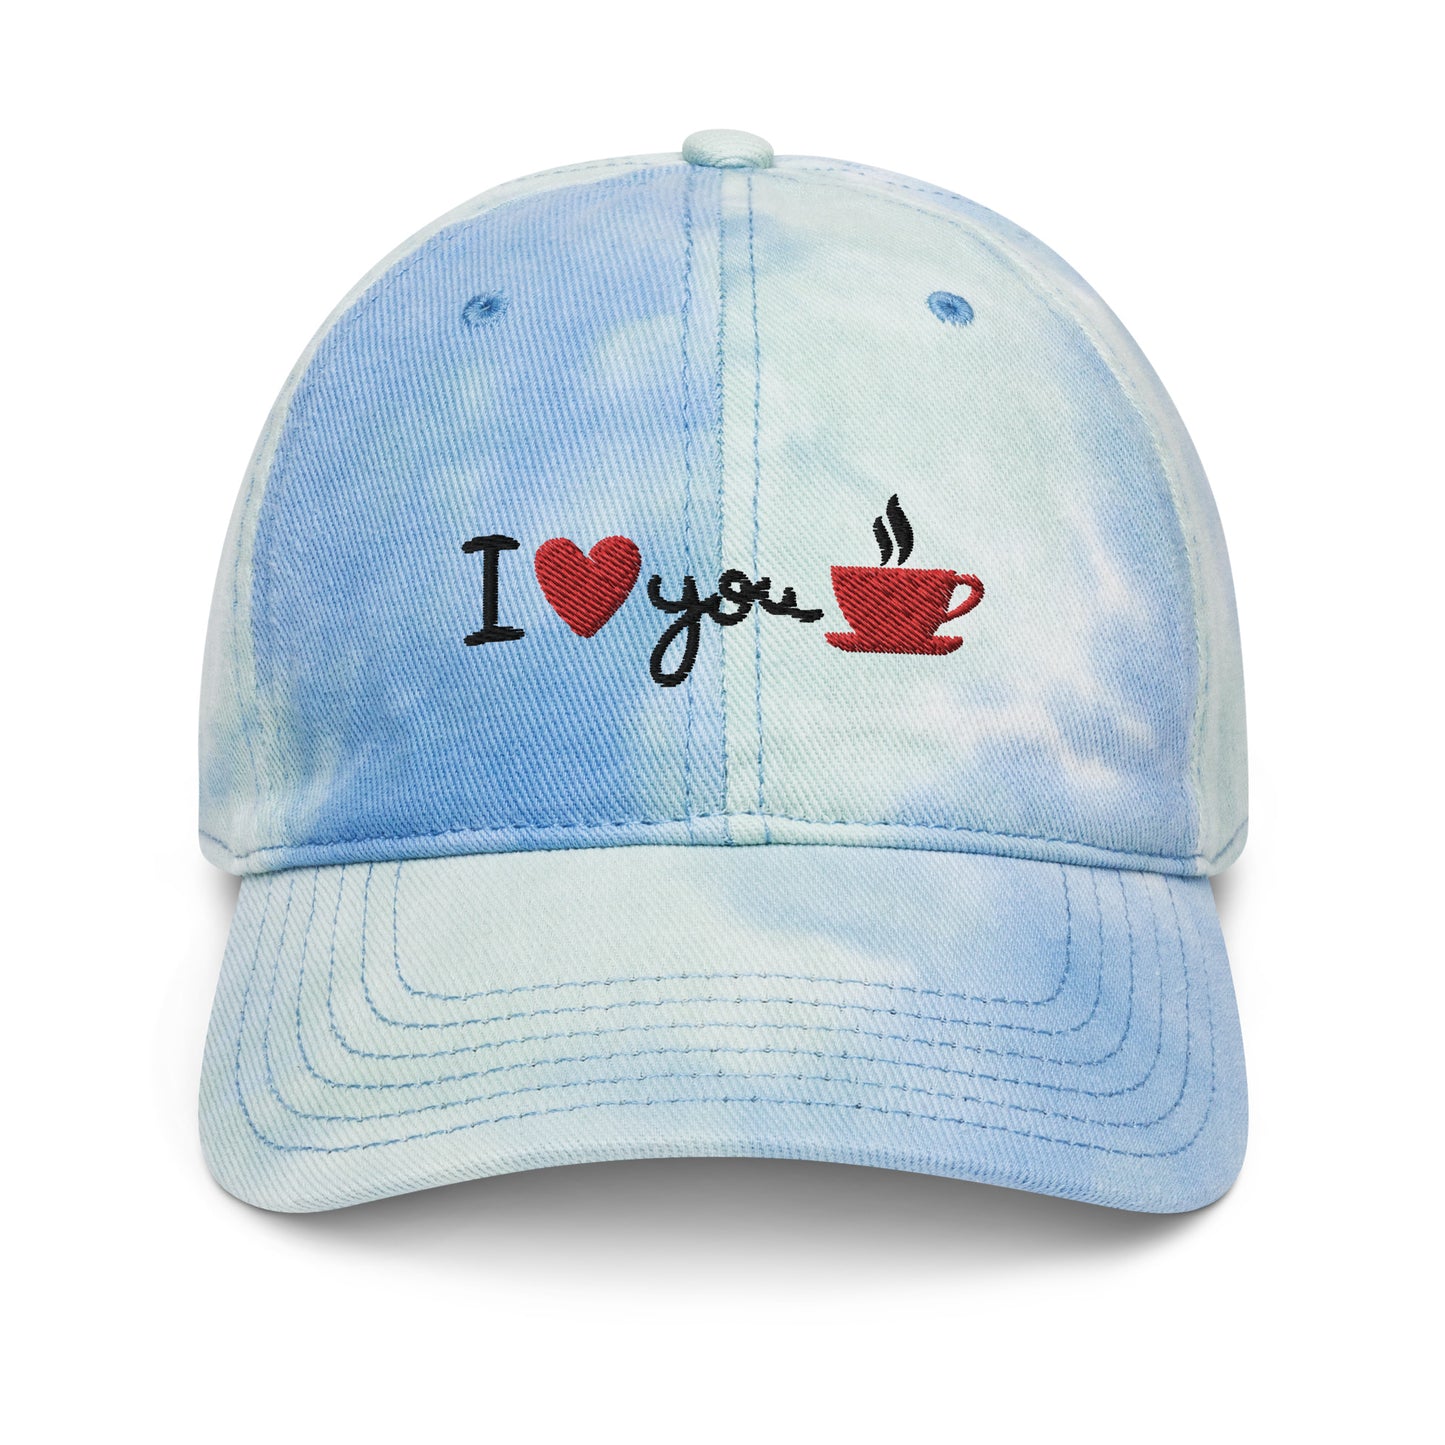 I LOVE YOU COFFEE - Tie dye hat